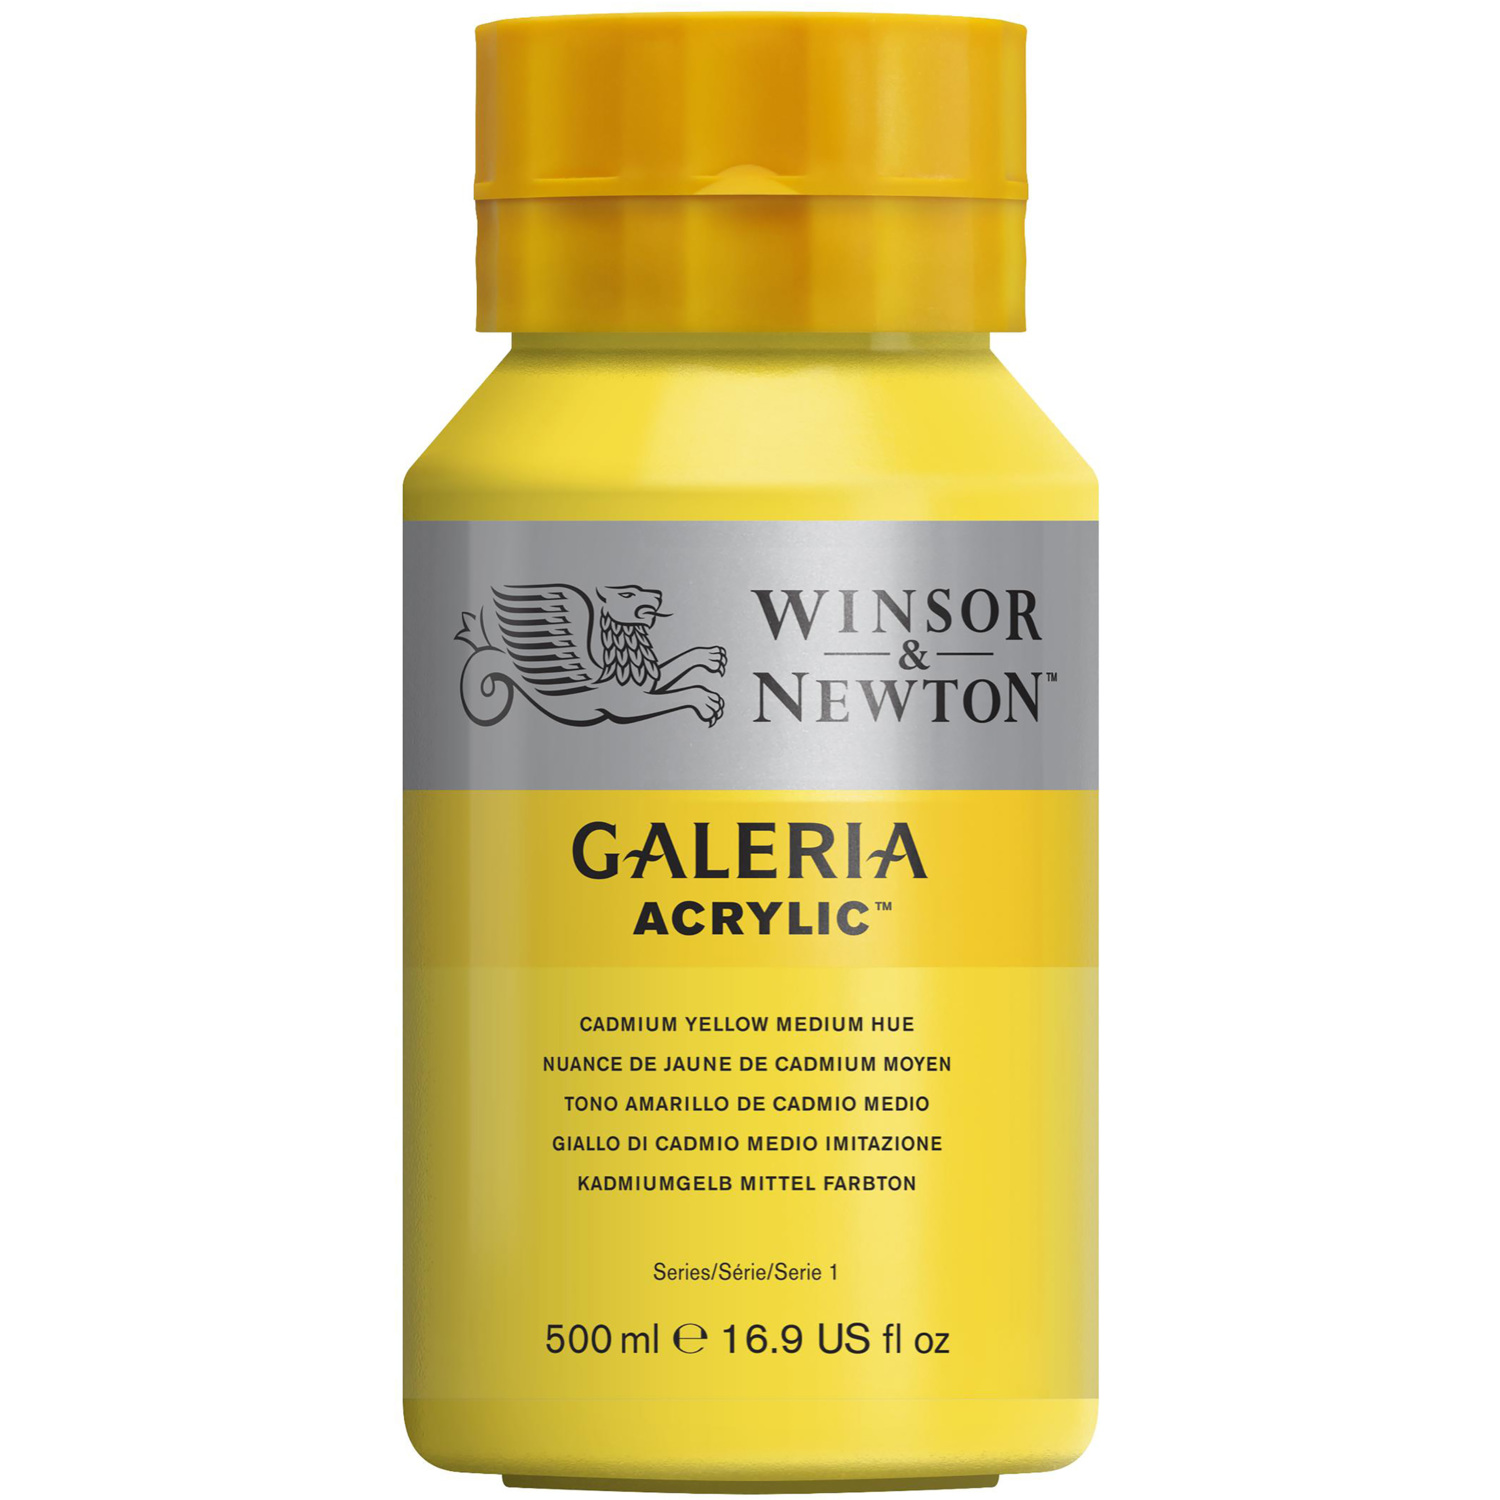 Galeria Acrylic - Cad Yellow Medium Hue - Cad Yellow Med Image 2